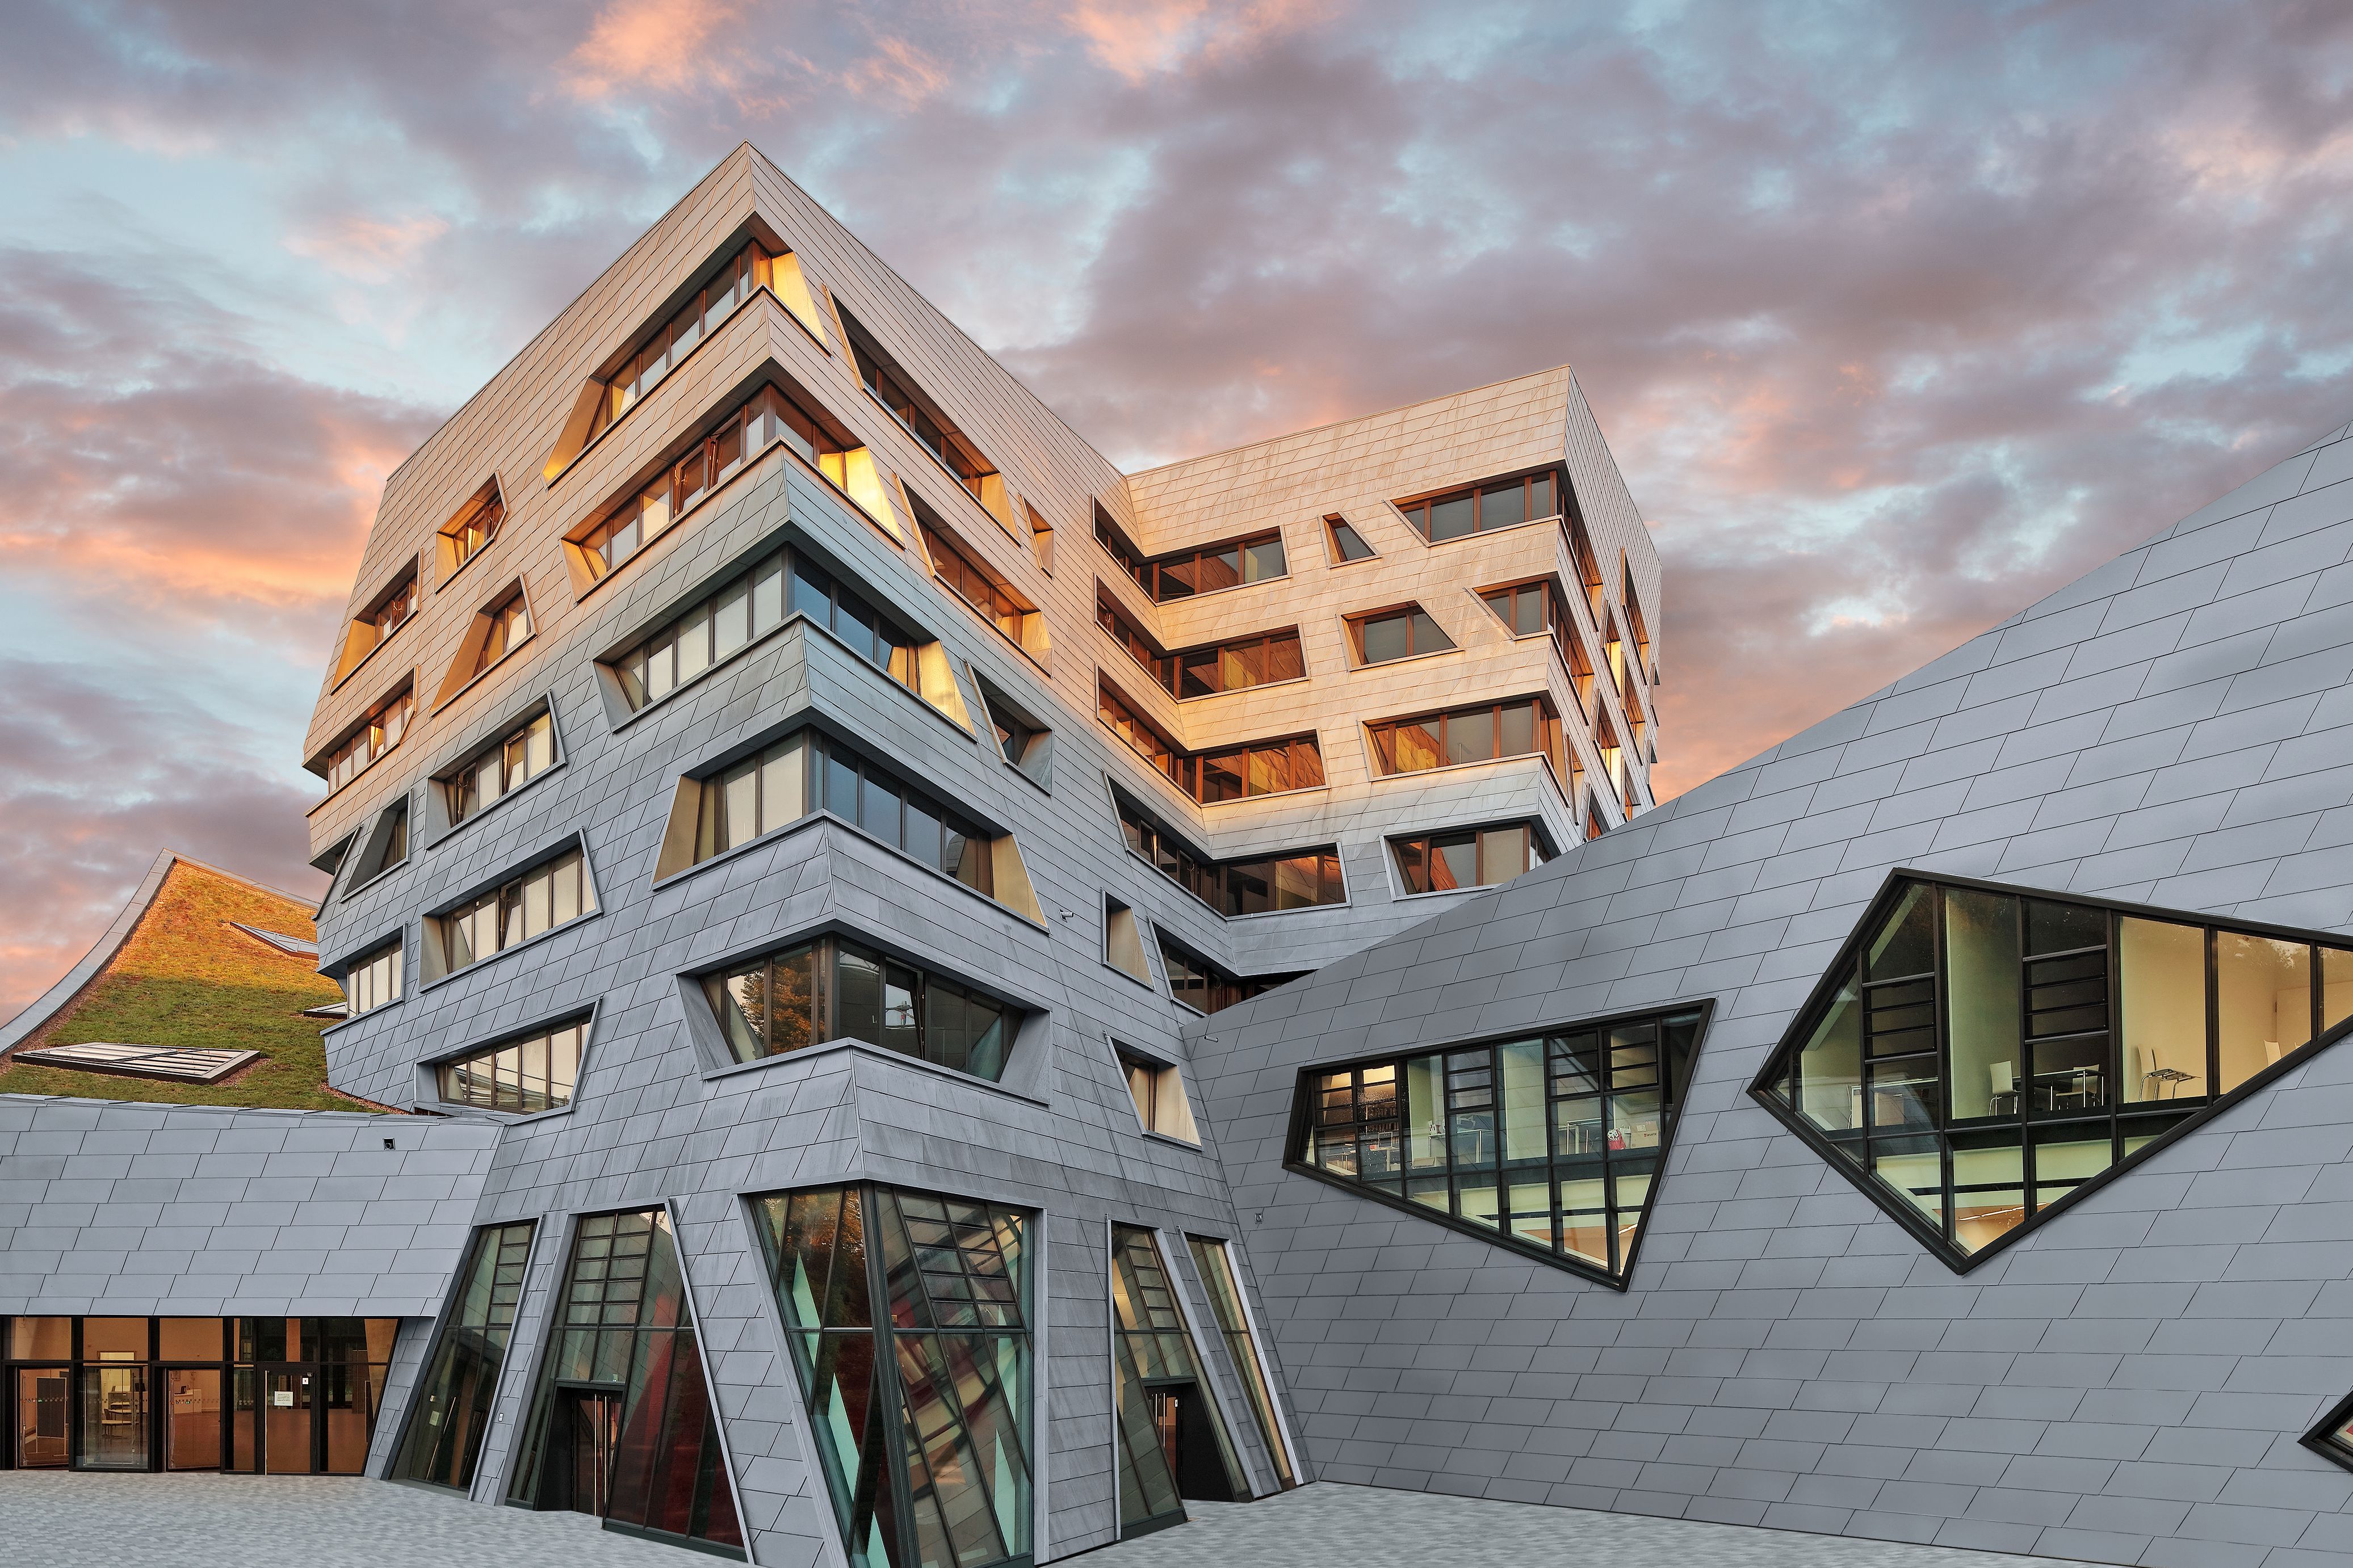 Byggeri med kompleks arkitektur og facade i RHEINZINK titaniumzink